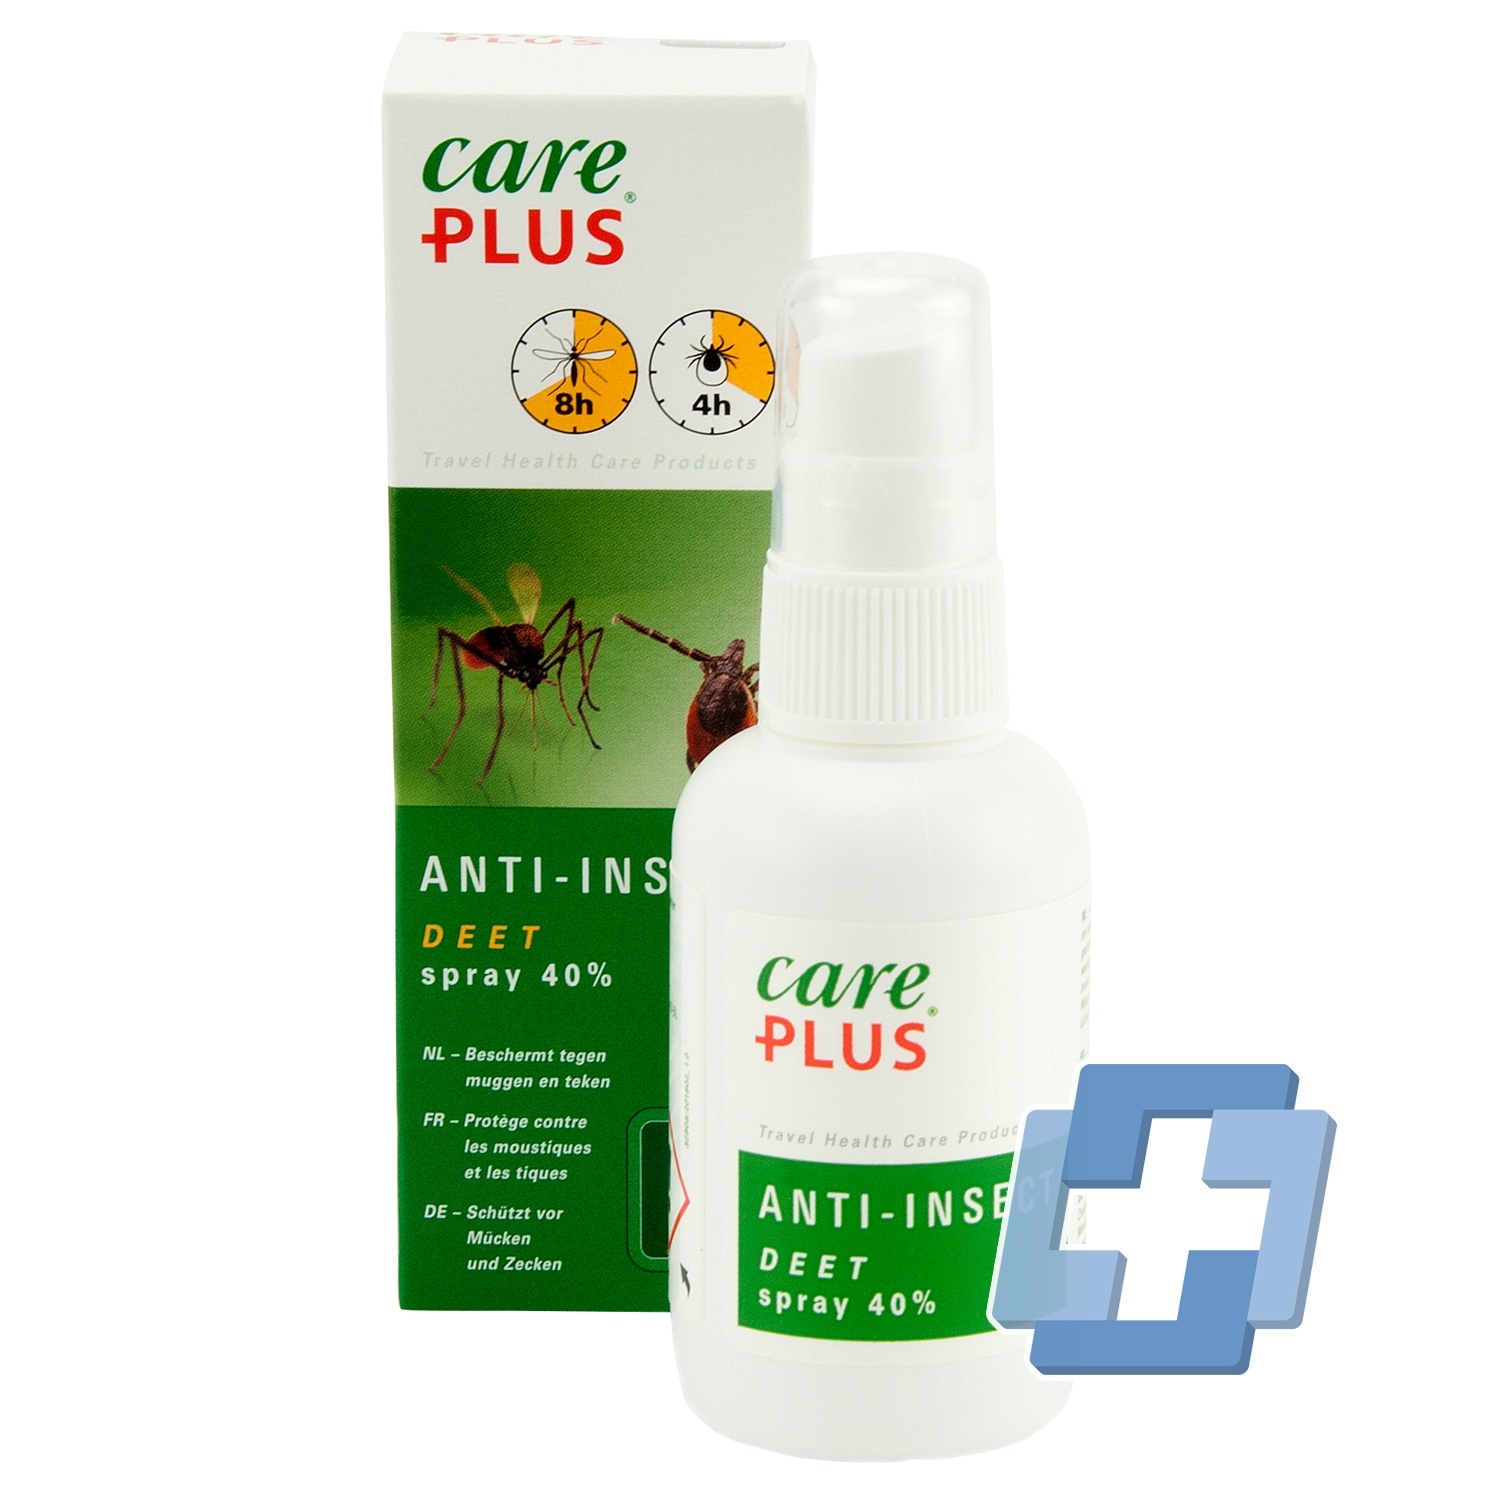 Ramen wassen Verdampen vrijgesteld Care Plus Anti-insect deet spray 40% | 5321010455 - EVAC